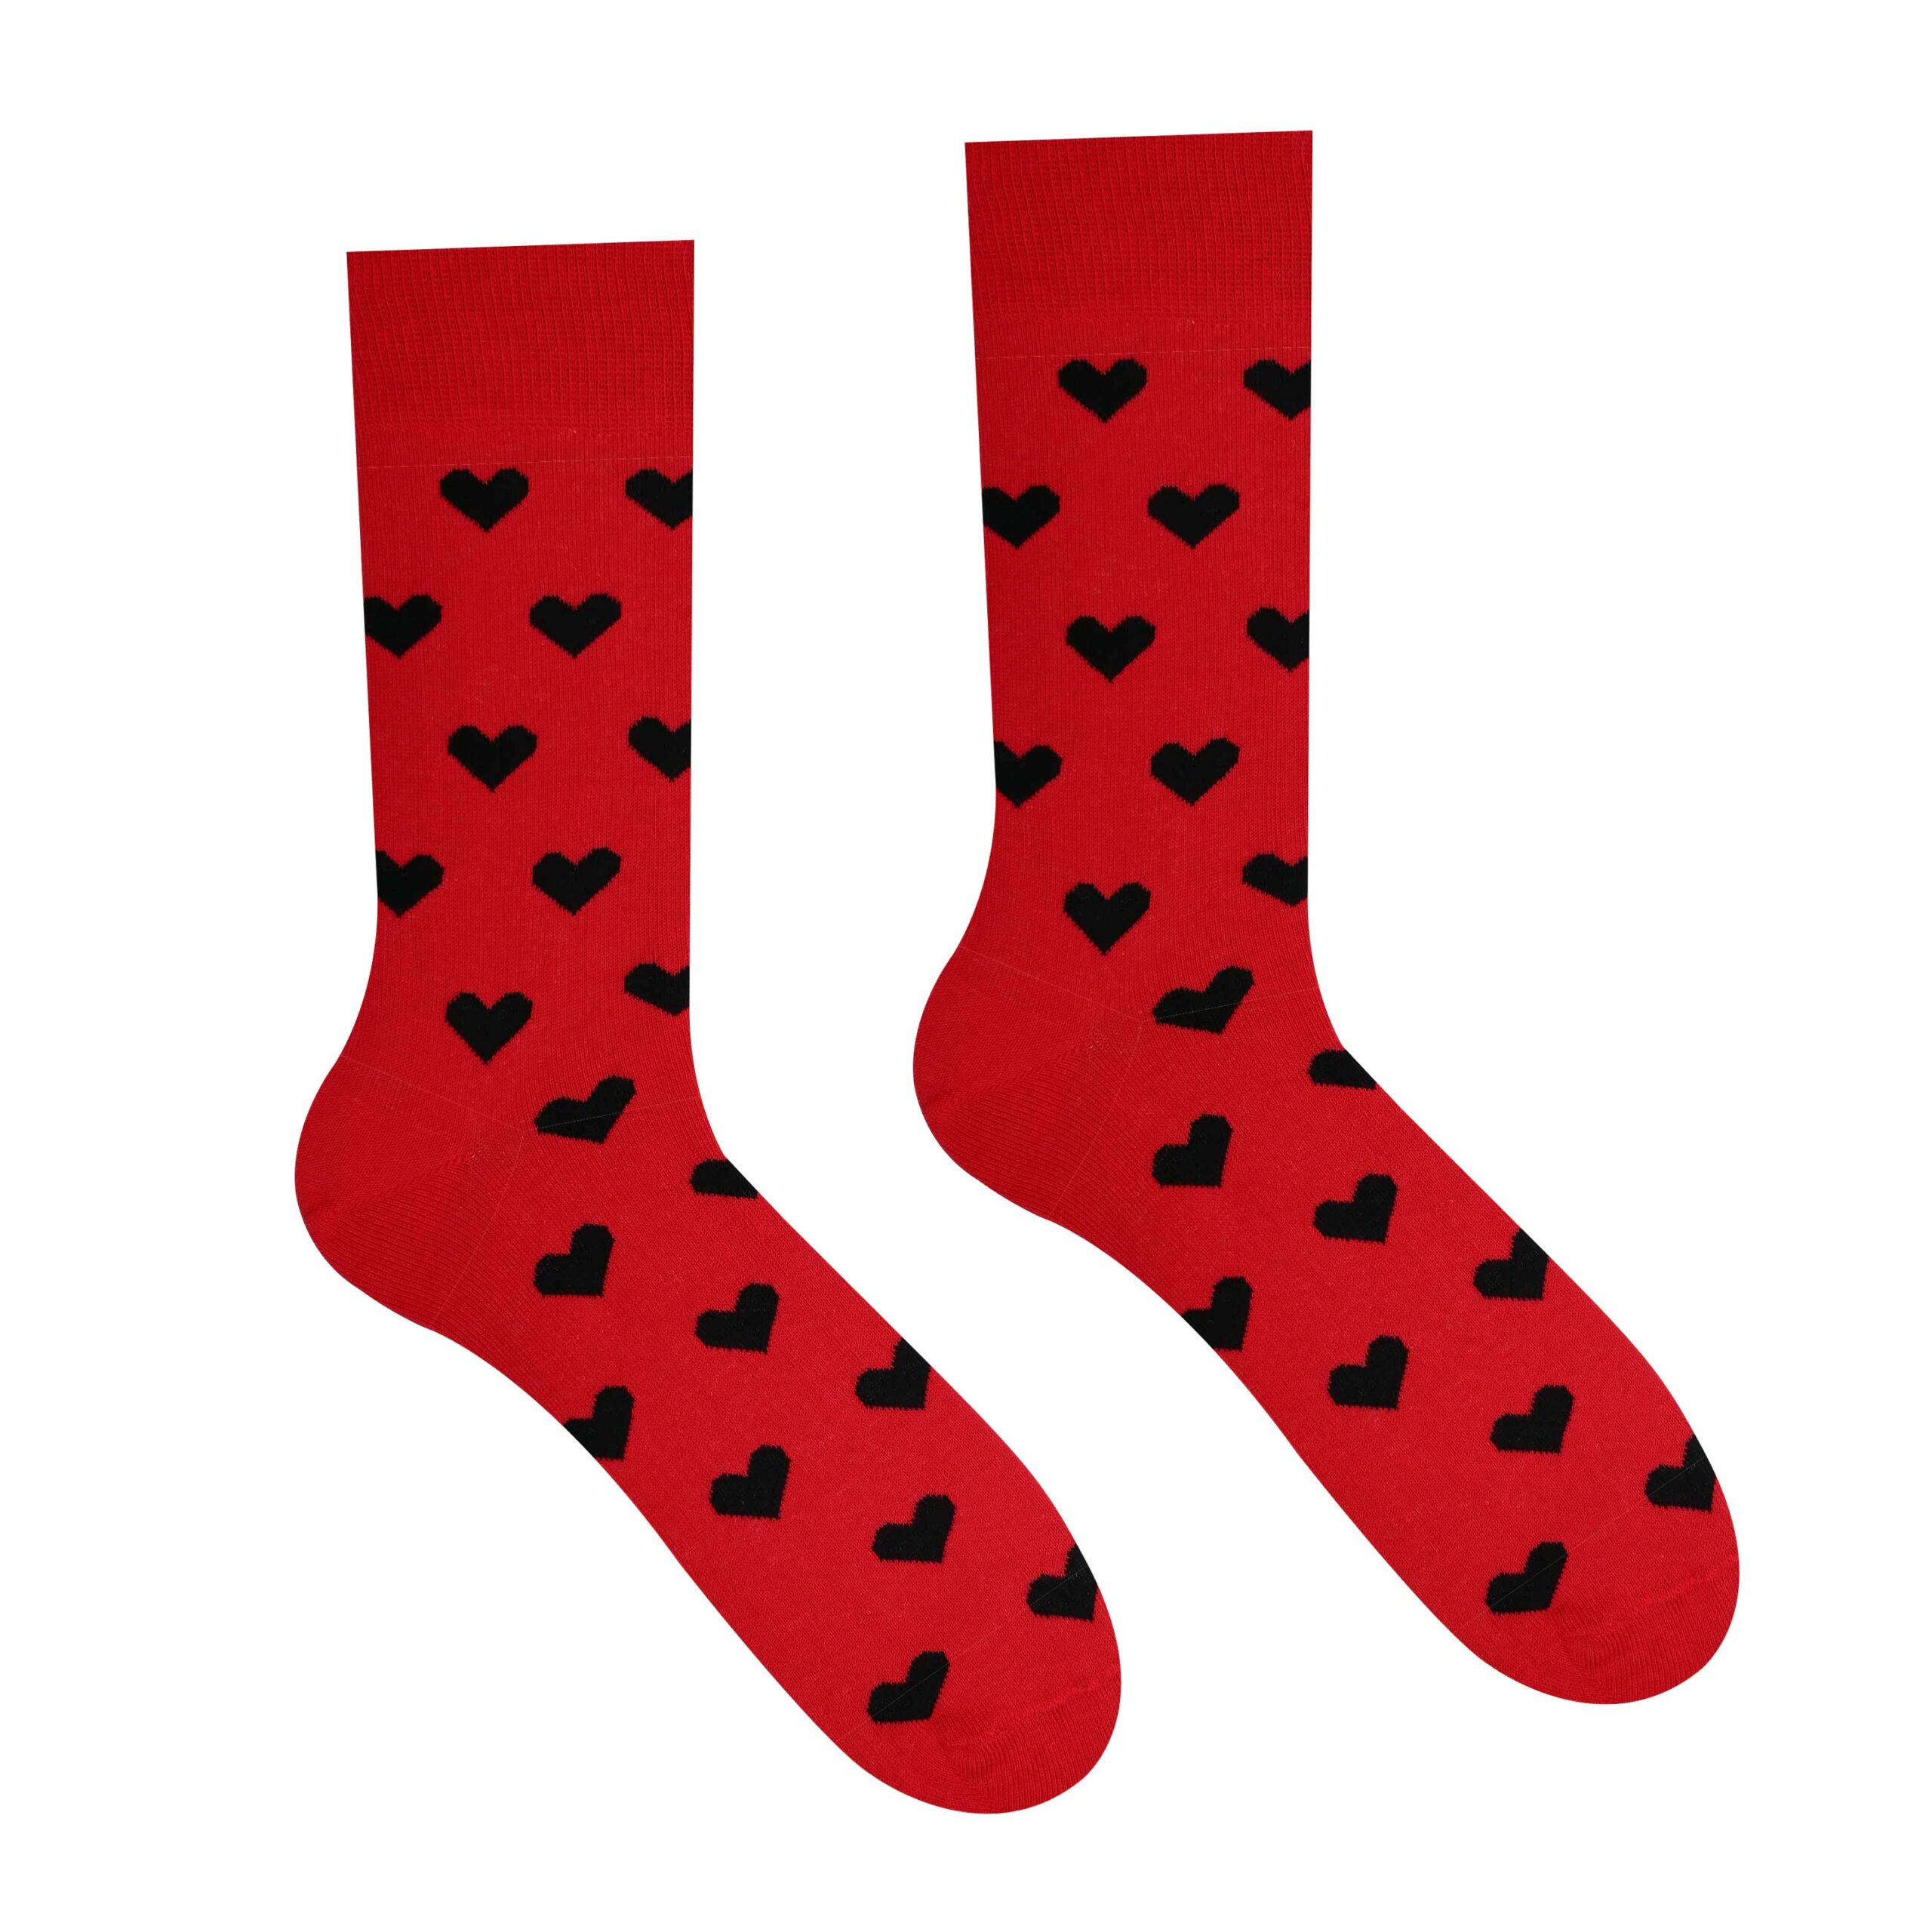 Veselé ponožky Malé srdiečka červené